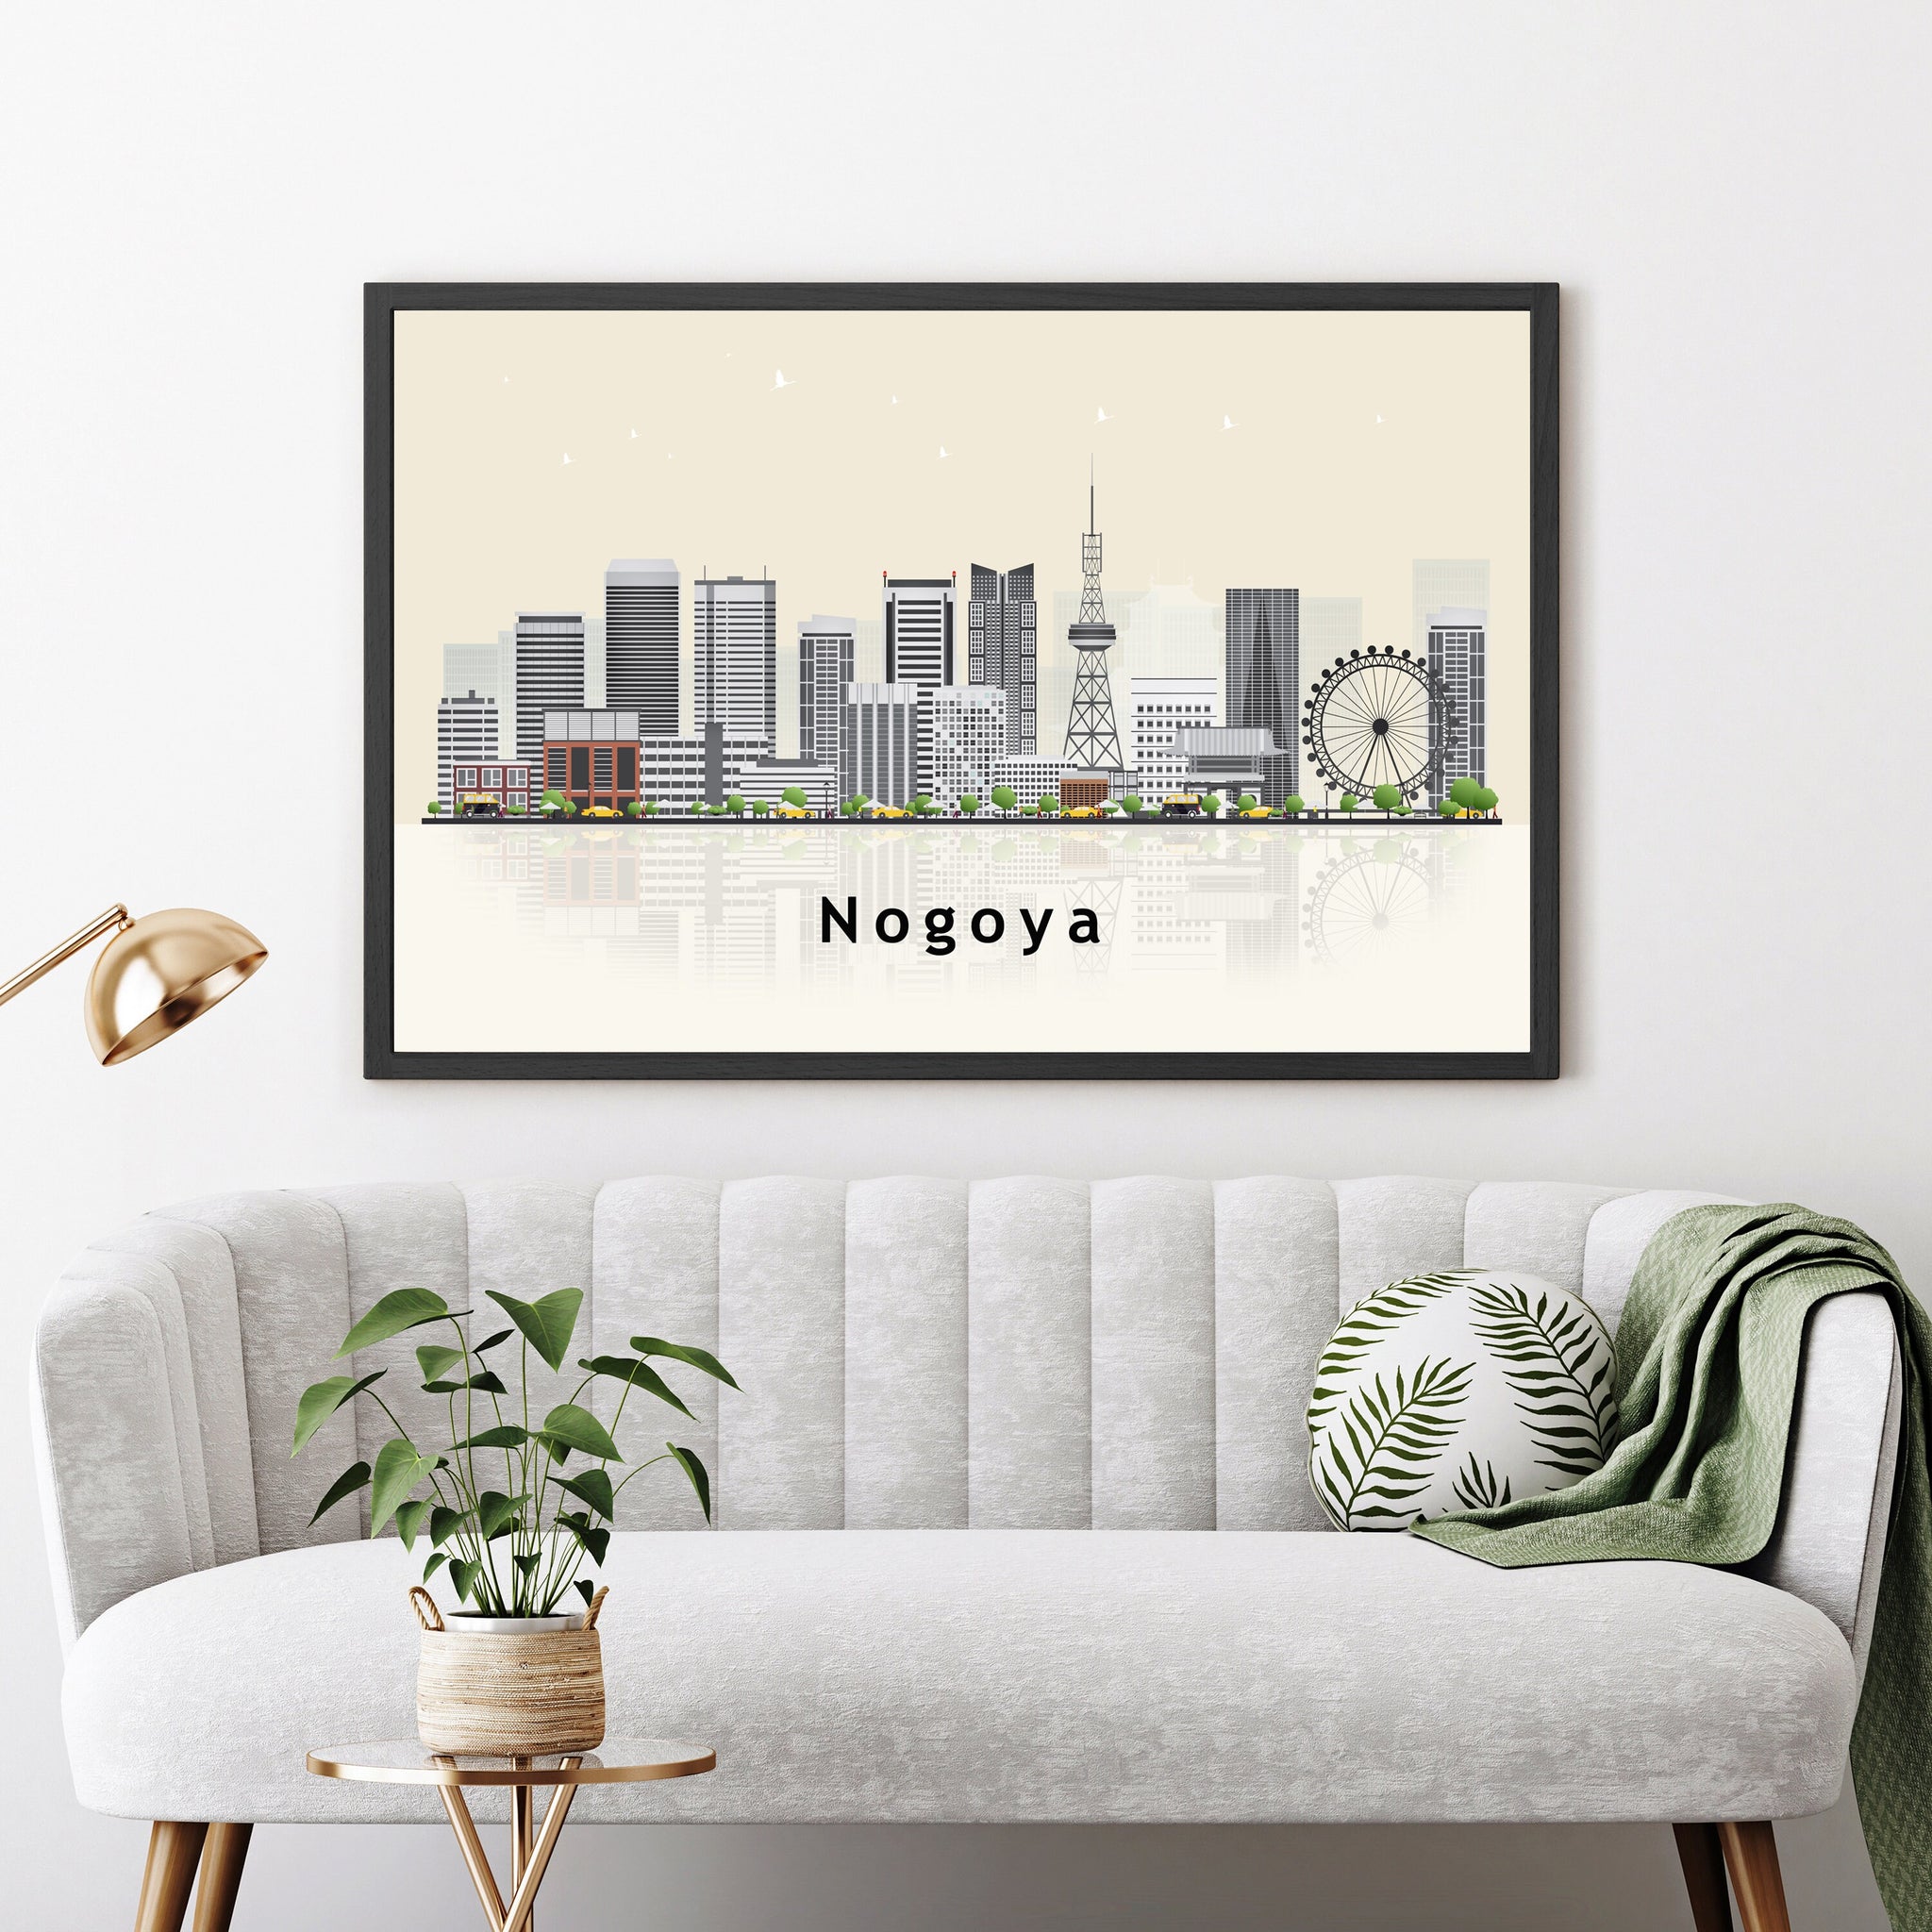 NAGOYA JAPAN Illustration skyline poster, Modern skyline cityscape poster, Nagoya city skyline landmark map poster, Home wall decorations